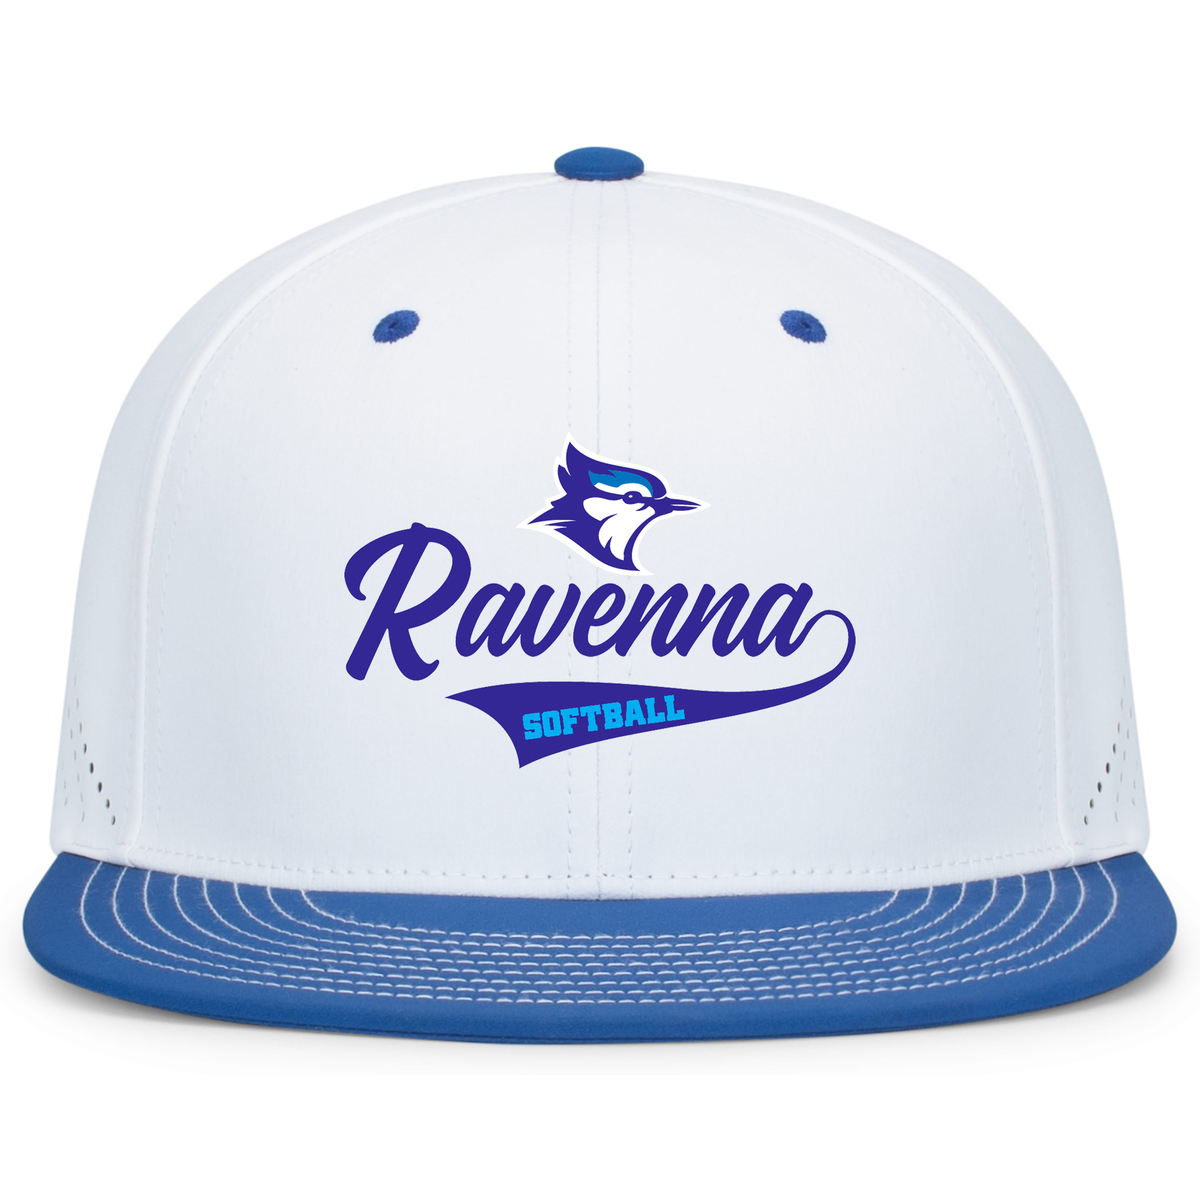 Ravenna Softball Premium Lightweight Perforated PacFlex CoolCore Cap